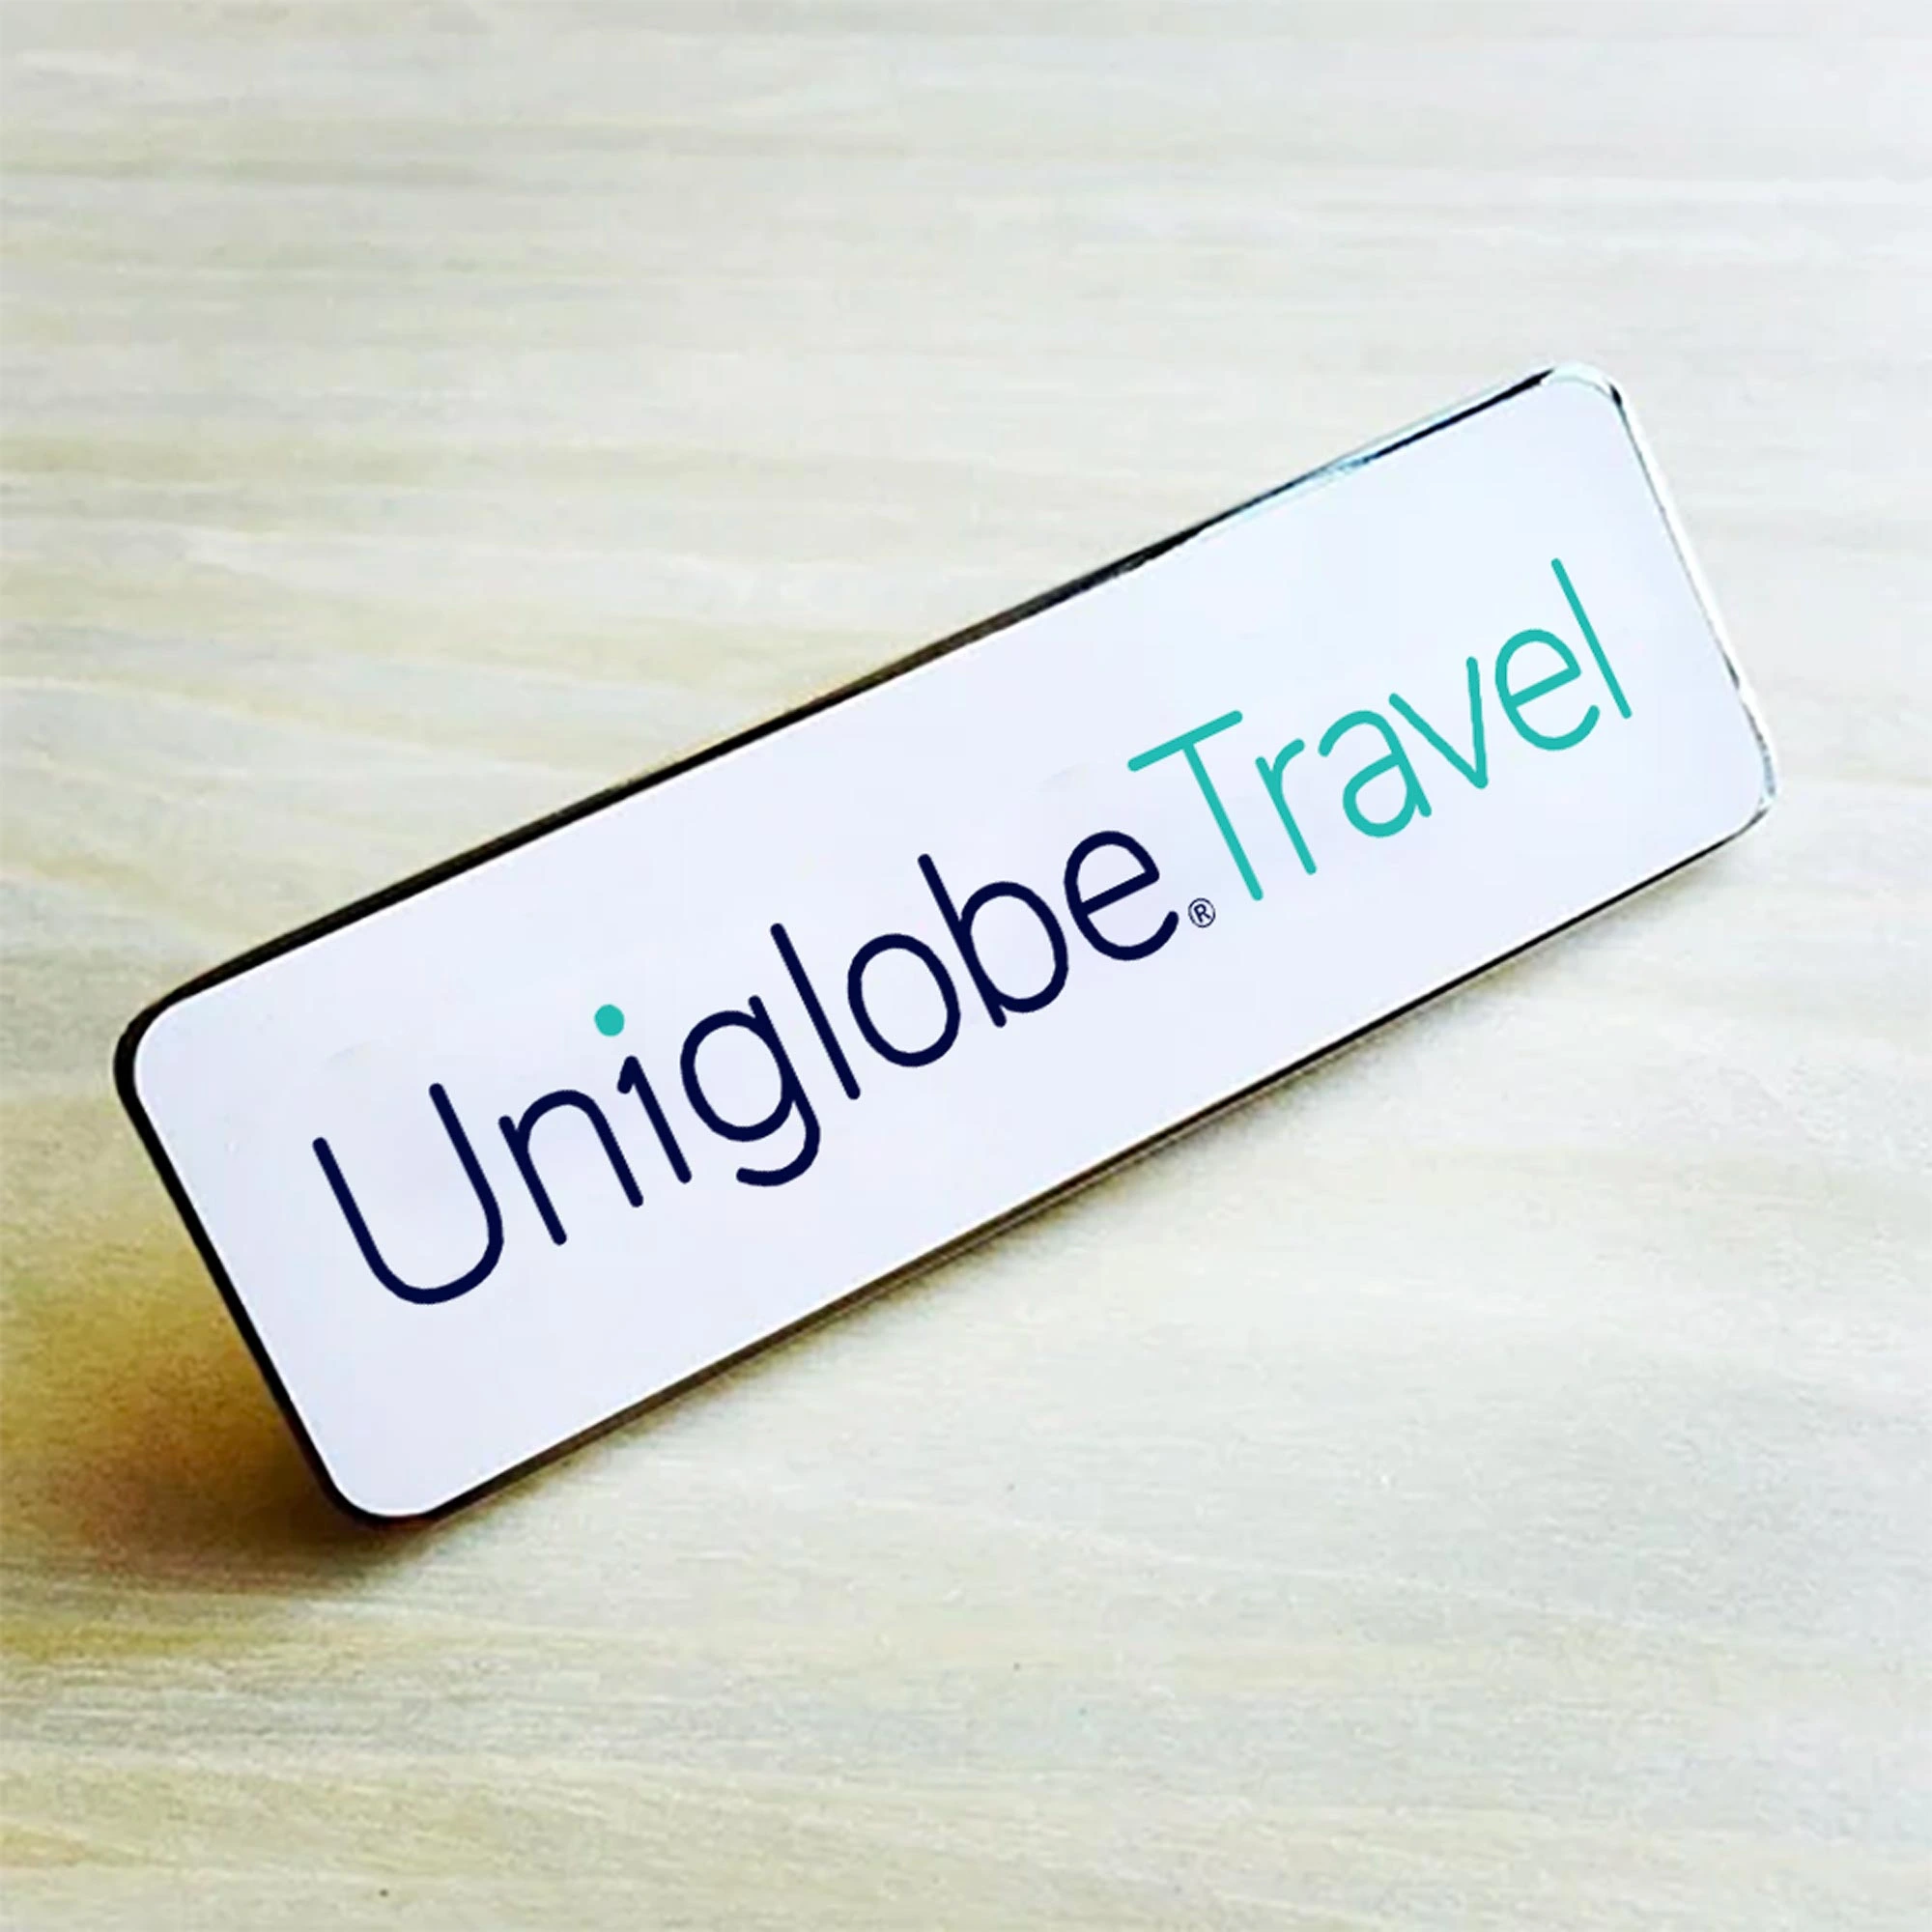 Uniglobe - branding